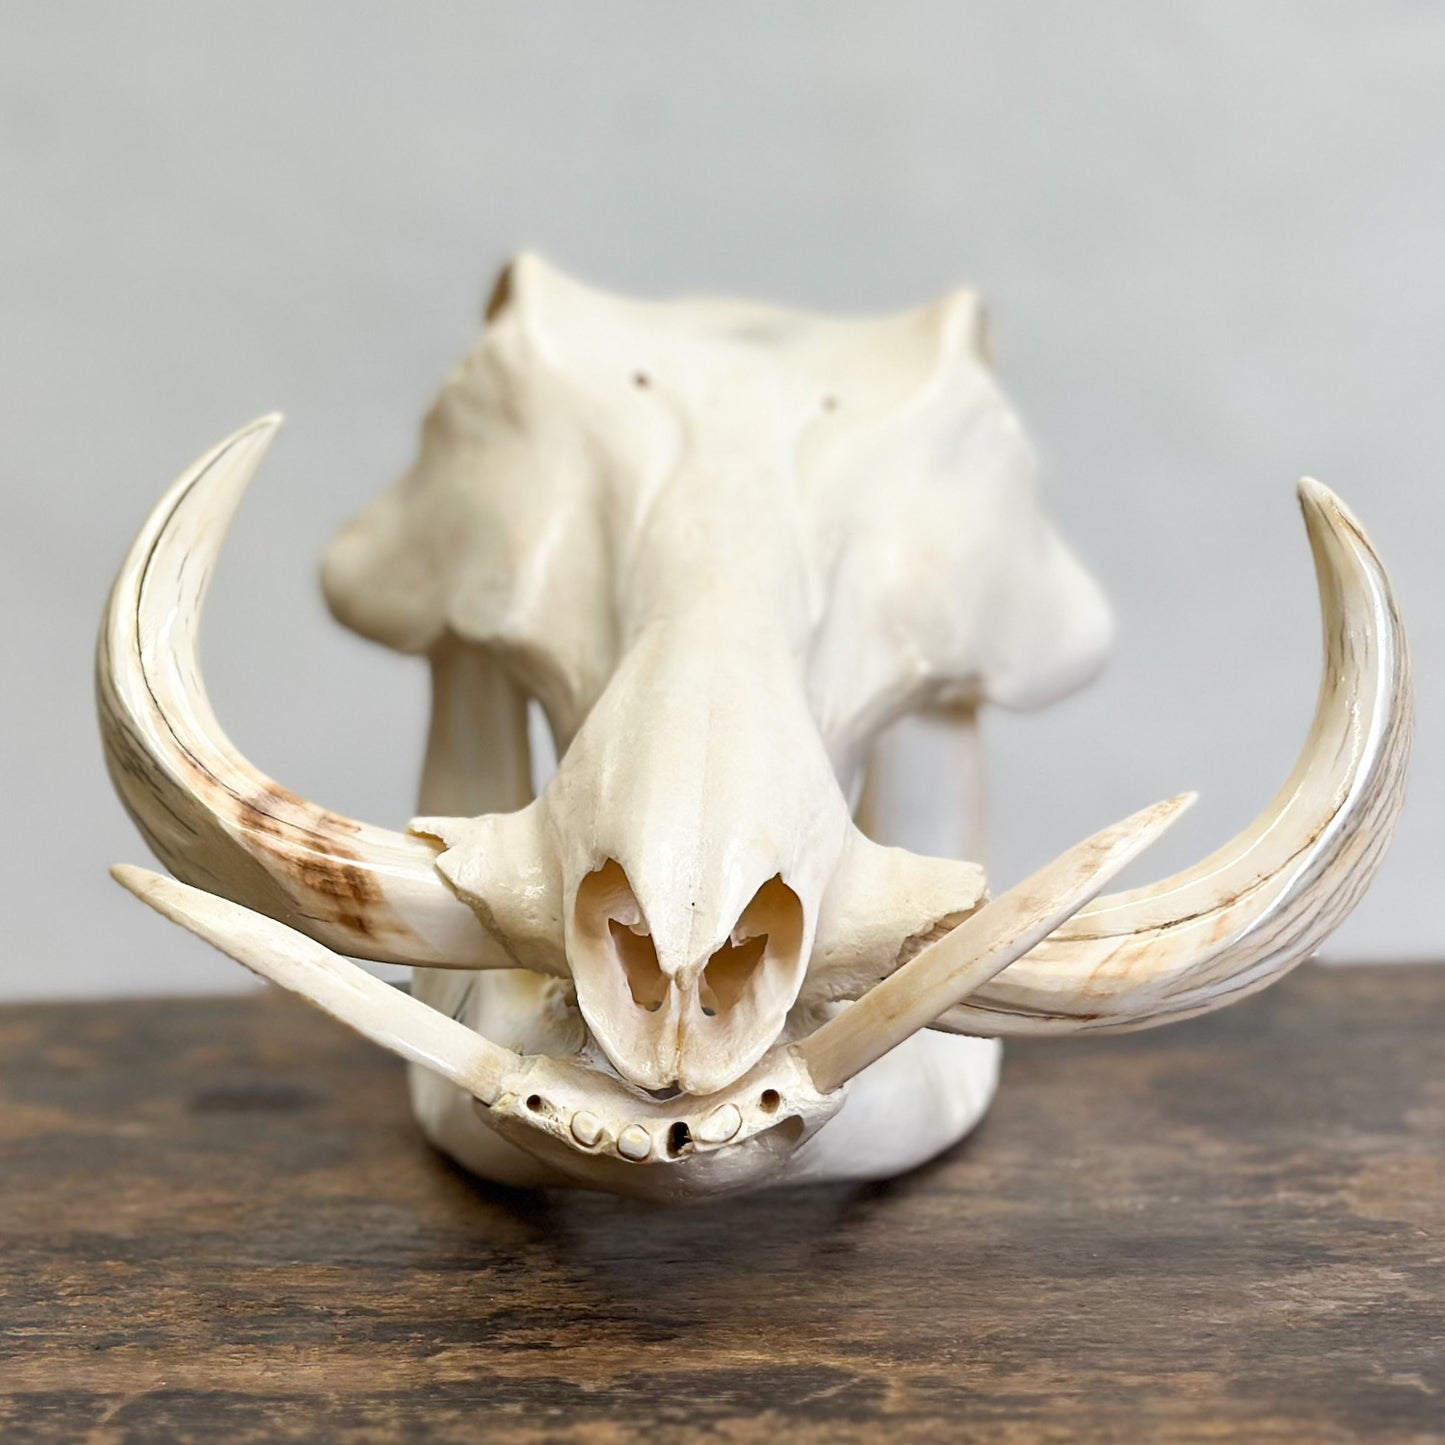 Polished Warthog Skull